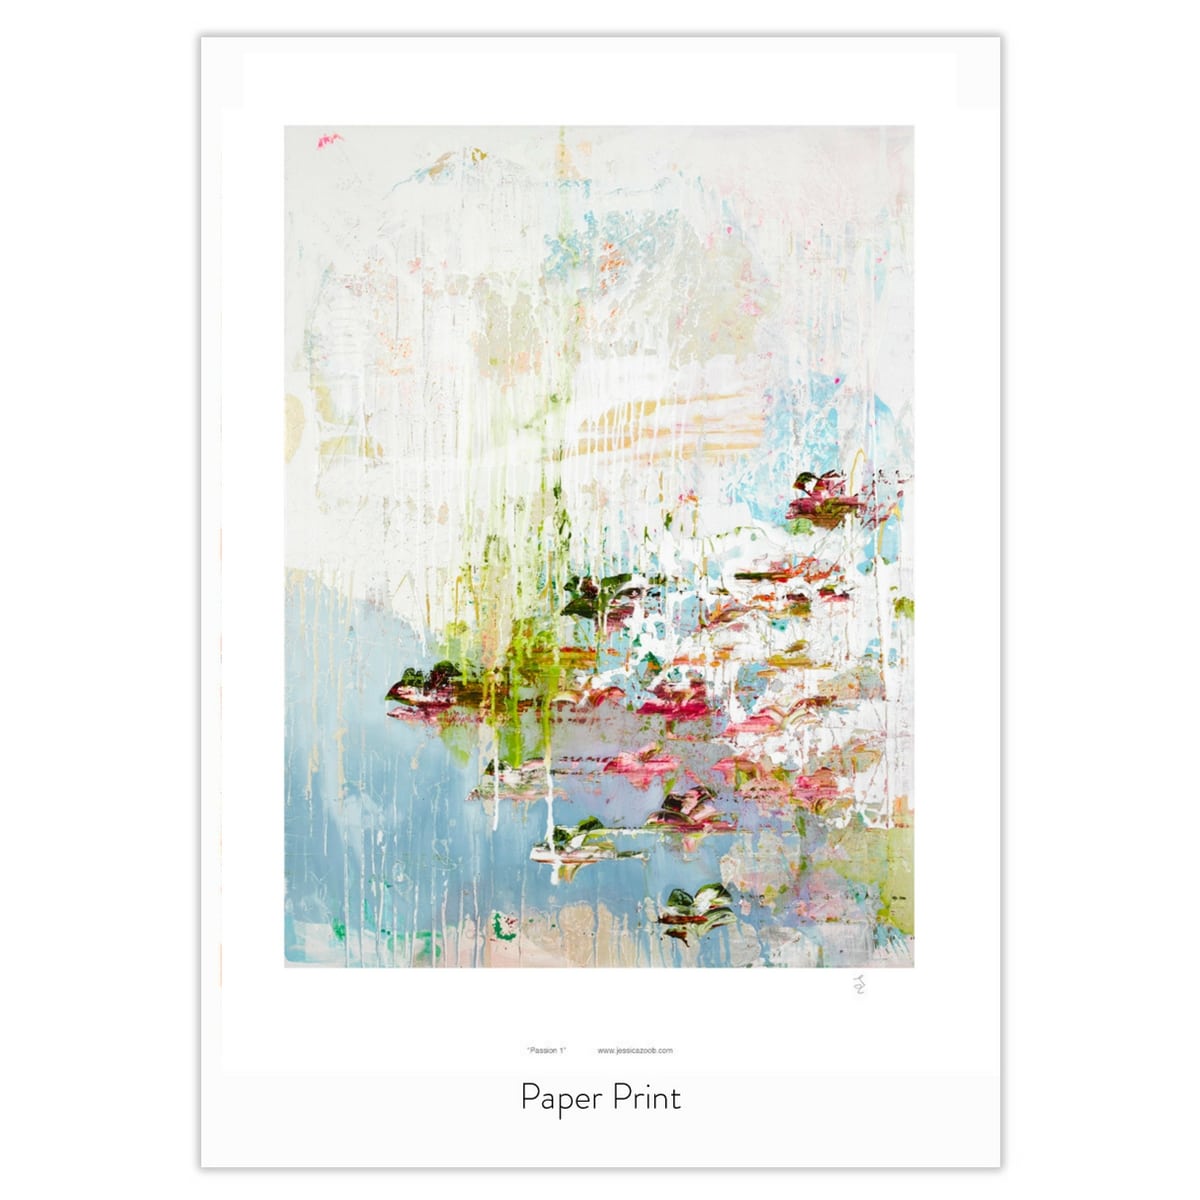 Jessica Zoob Contemporary fine art print - Passion 1 in Paper Print Format